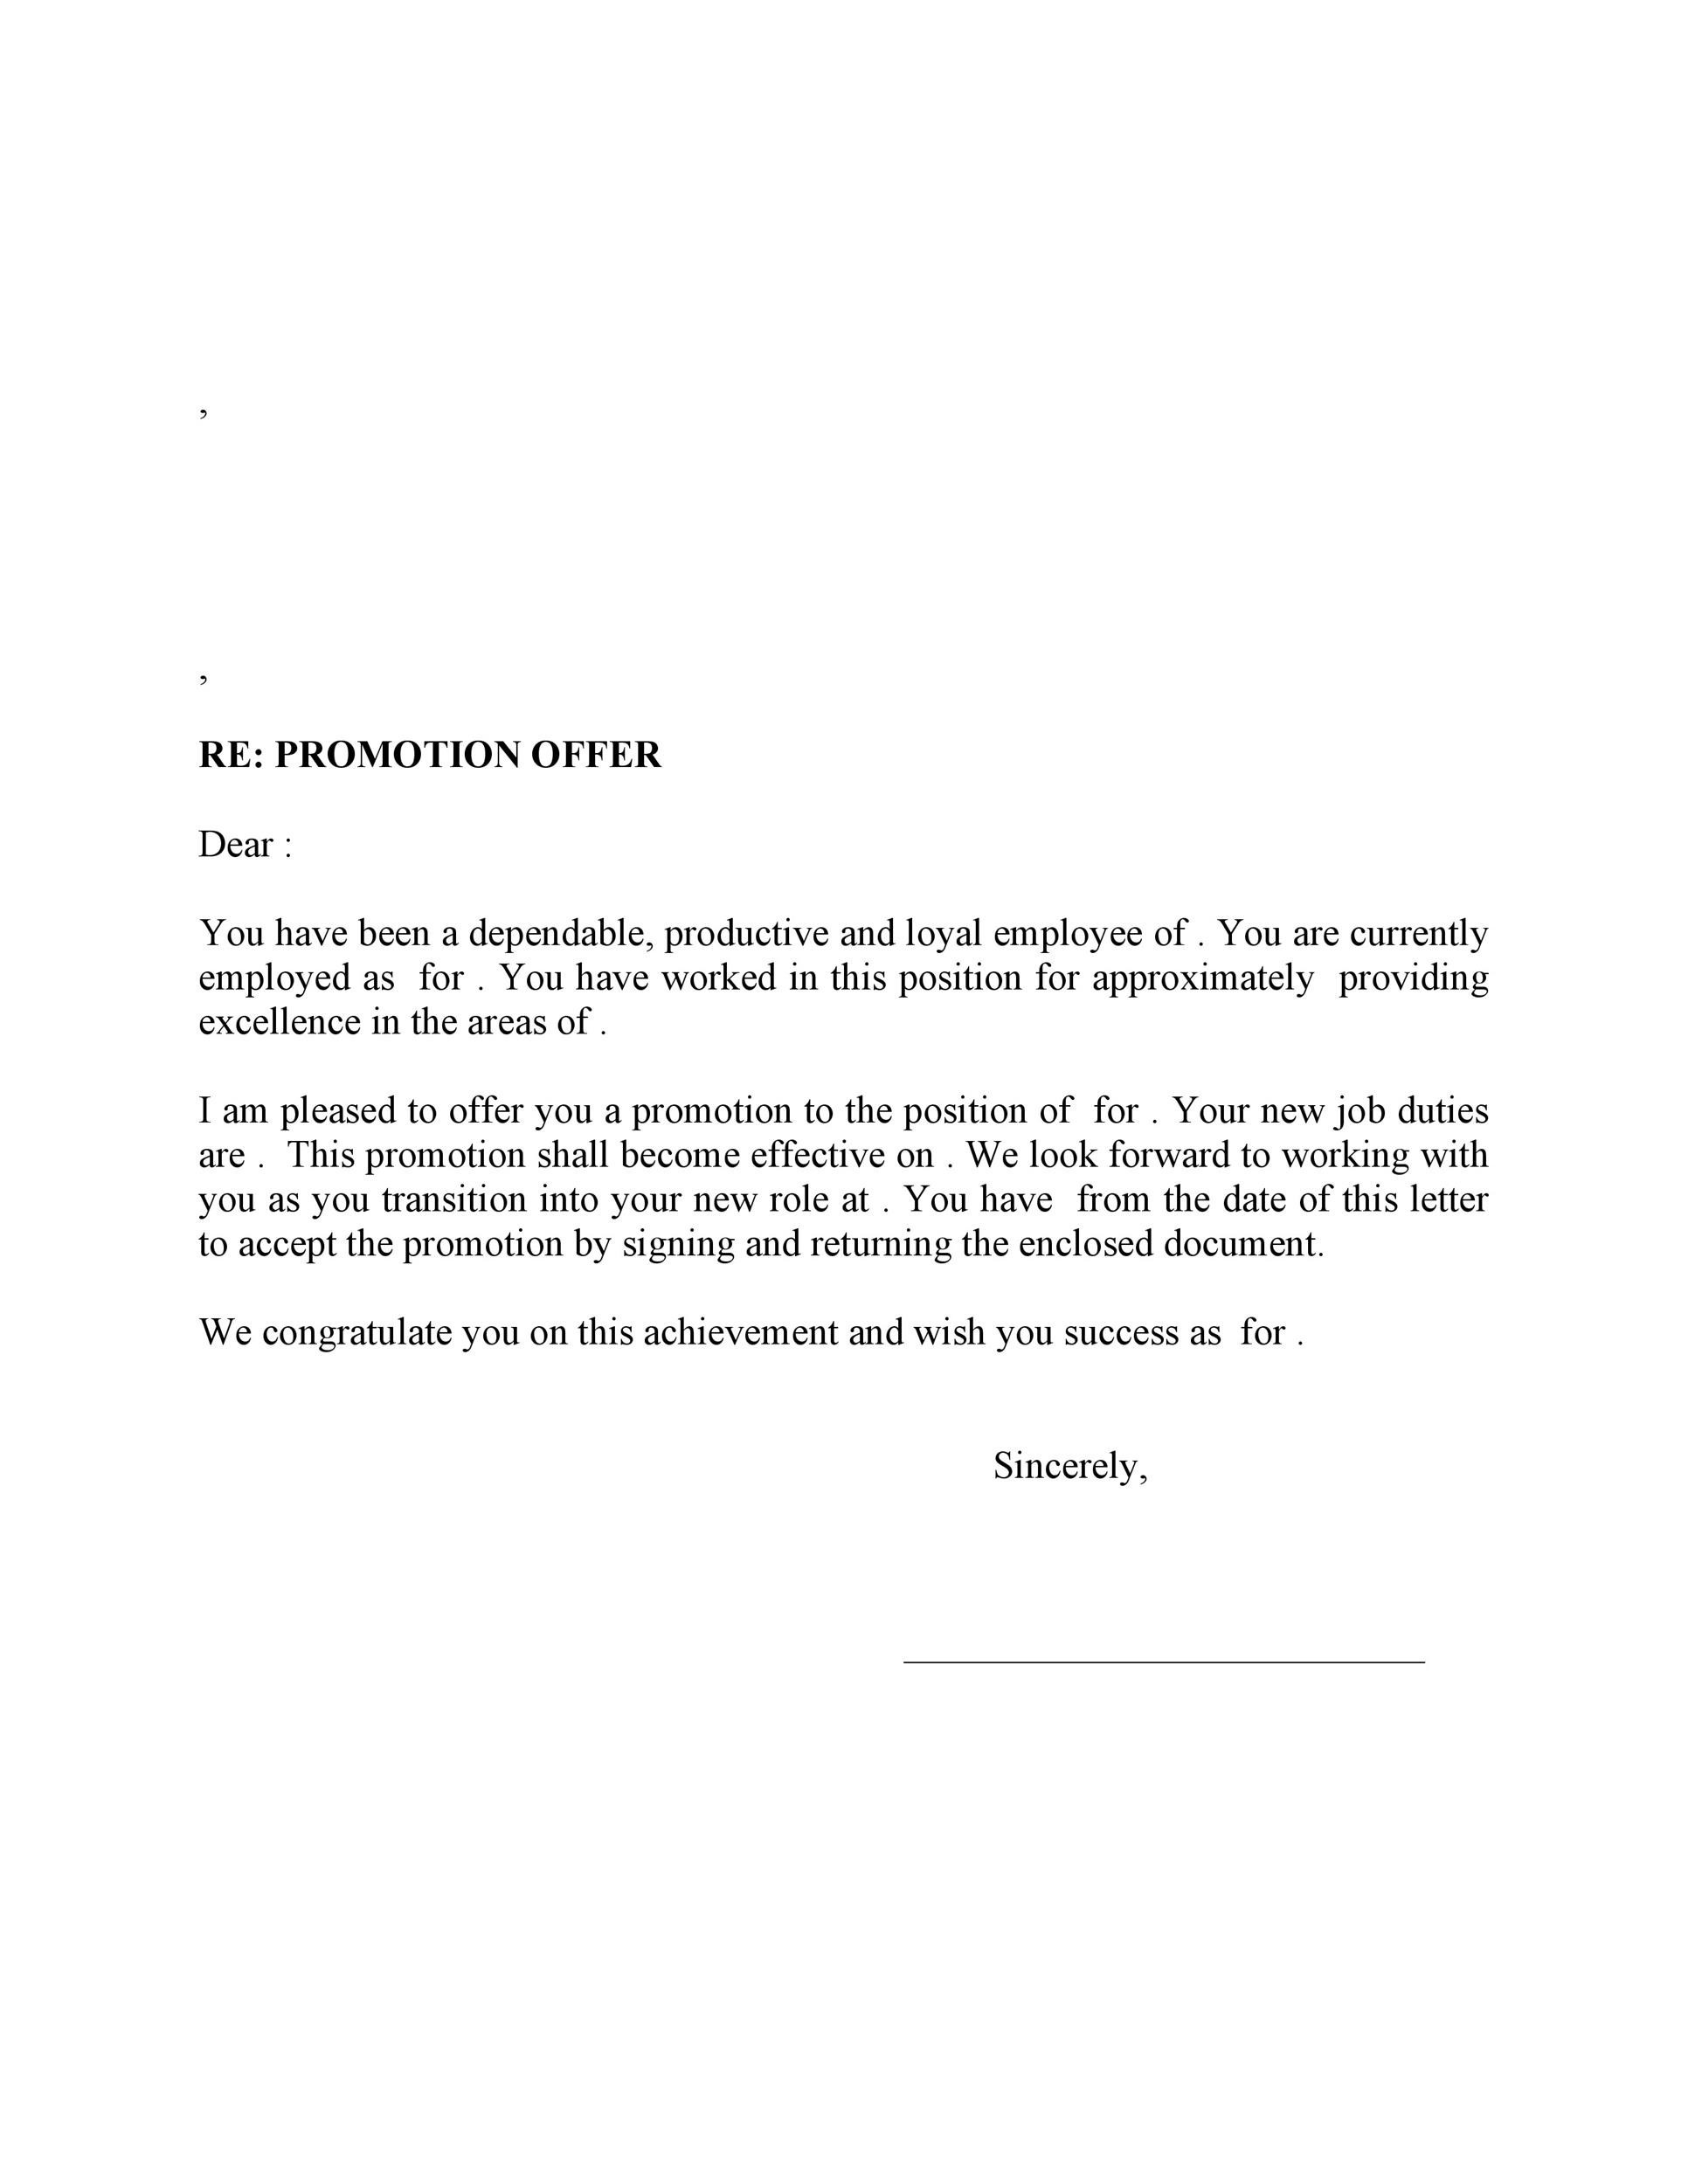 cover letter for job promotion